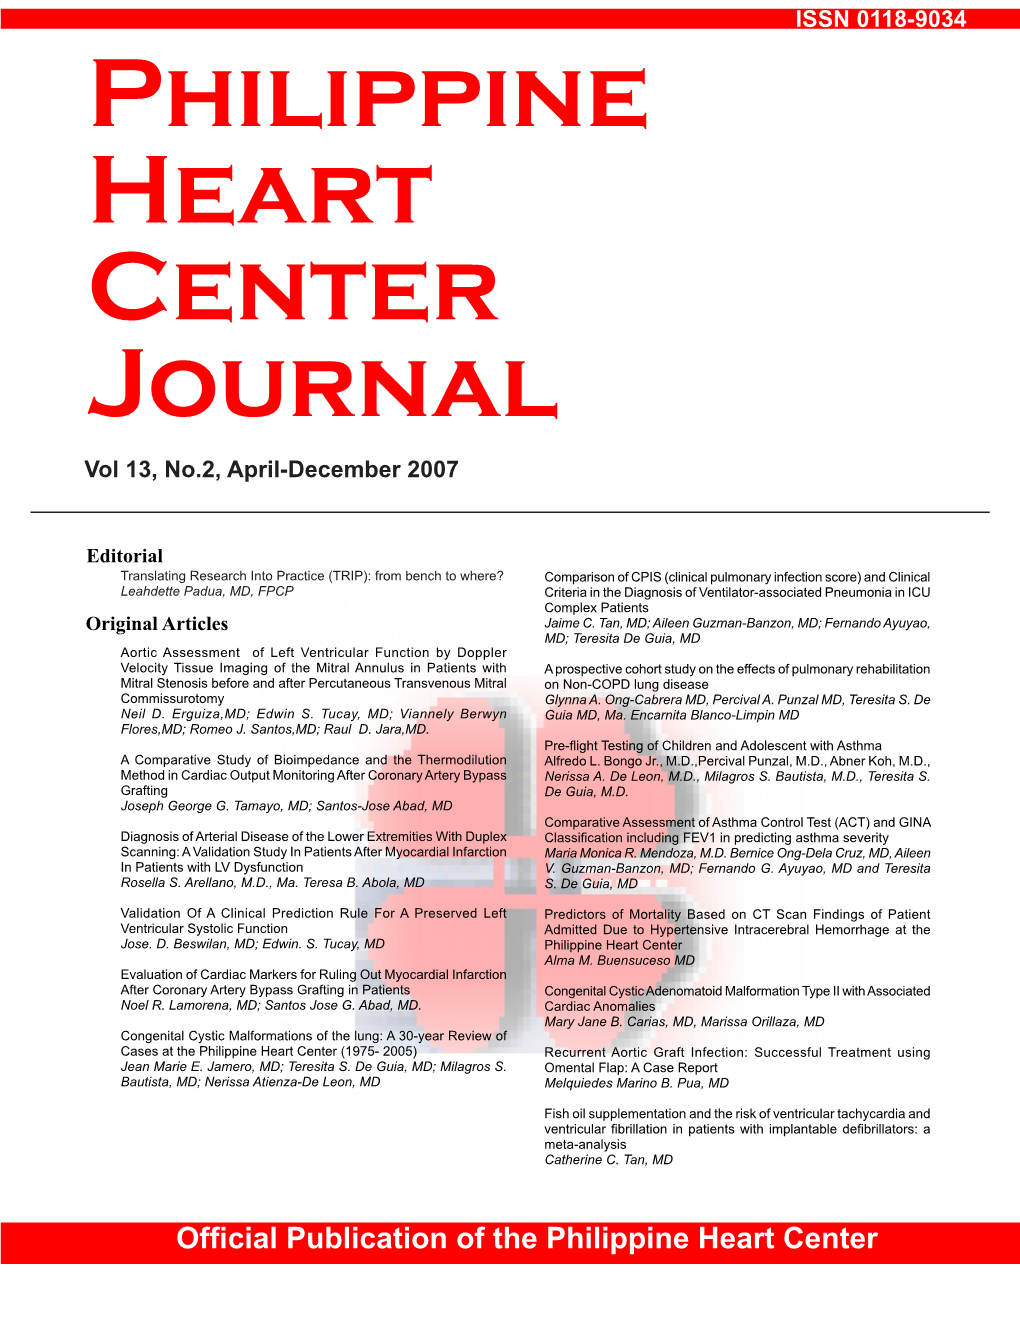 Philippine Heart Center Journal Vol 13, No.2, April-December 2007